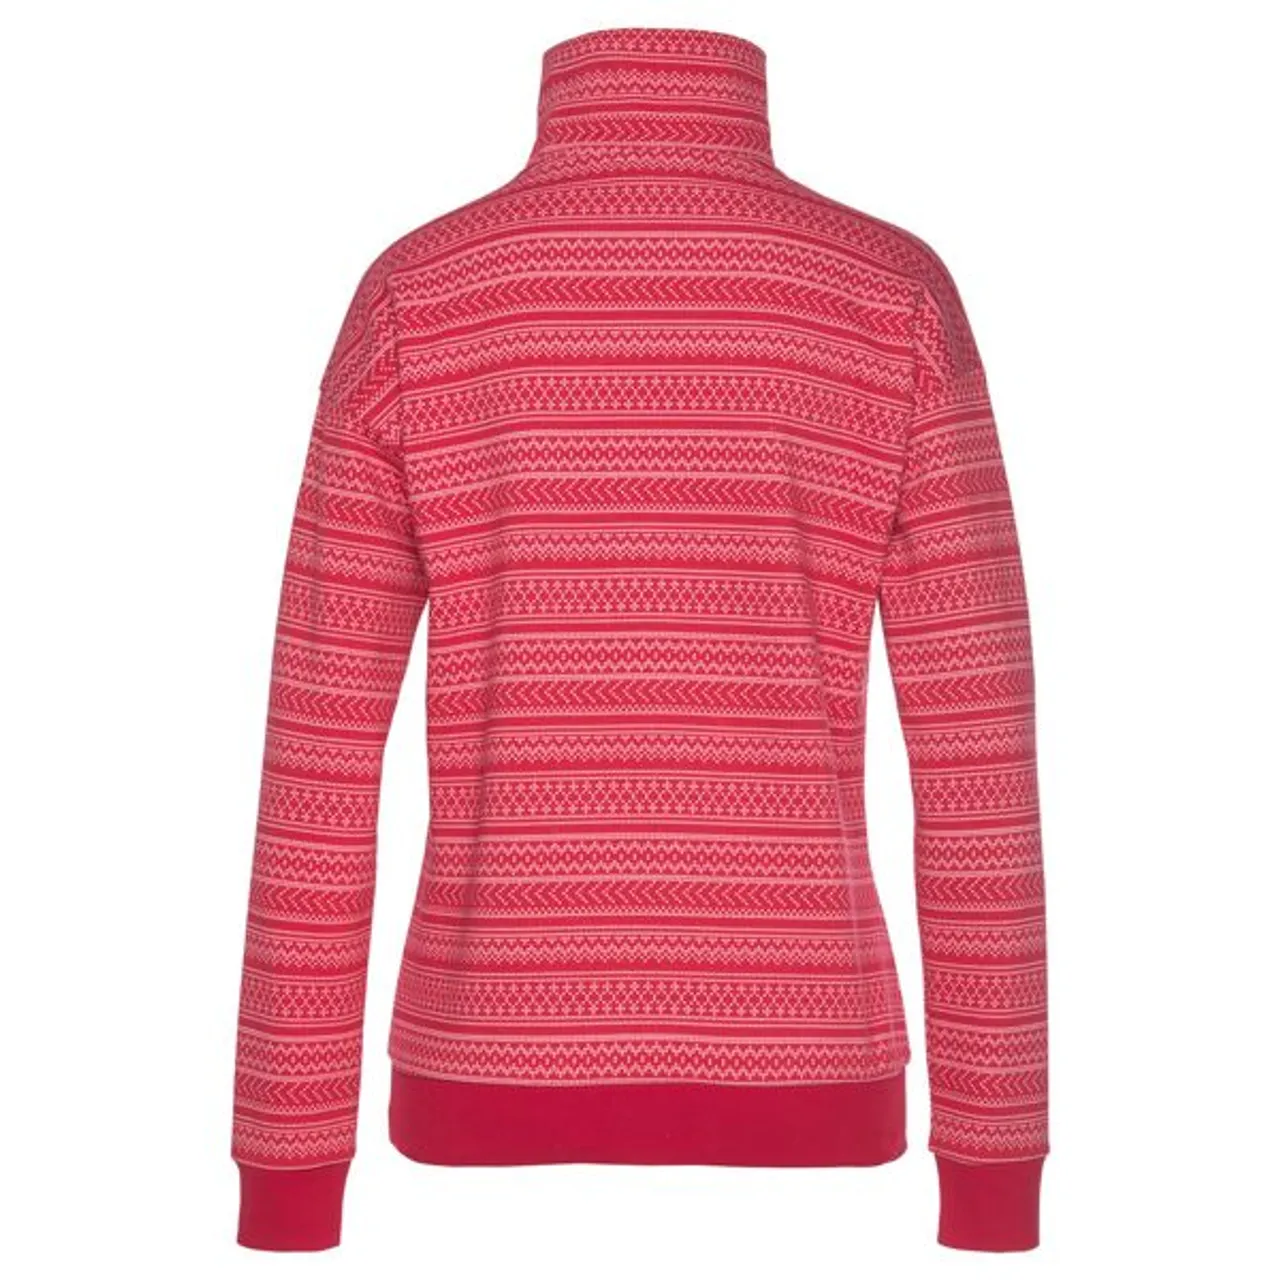 Sweatshirt S.OLIVER Gr. 32/34, rot (cherryrot) Damen Sweatshirts Homewear Oberteile mit Norwegermuster, Loungeanzug